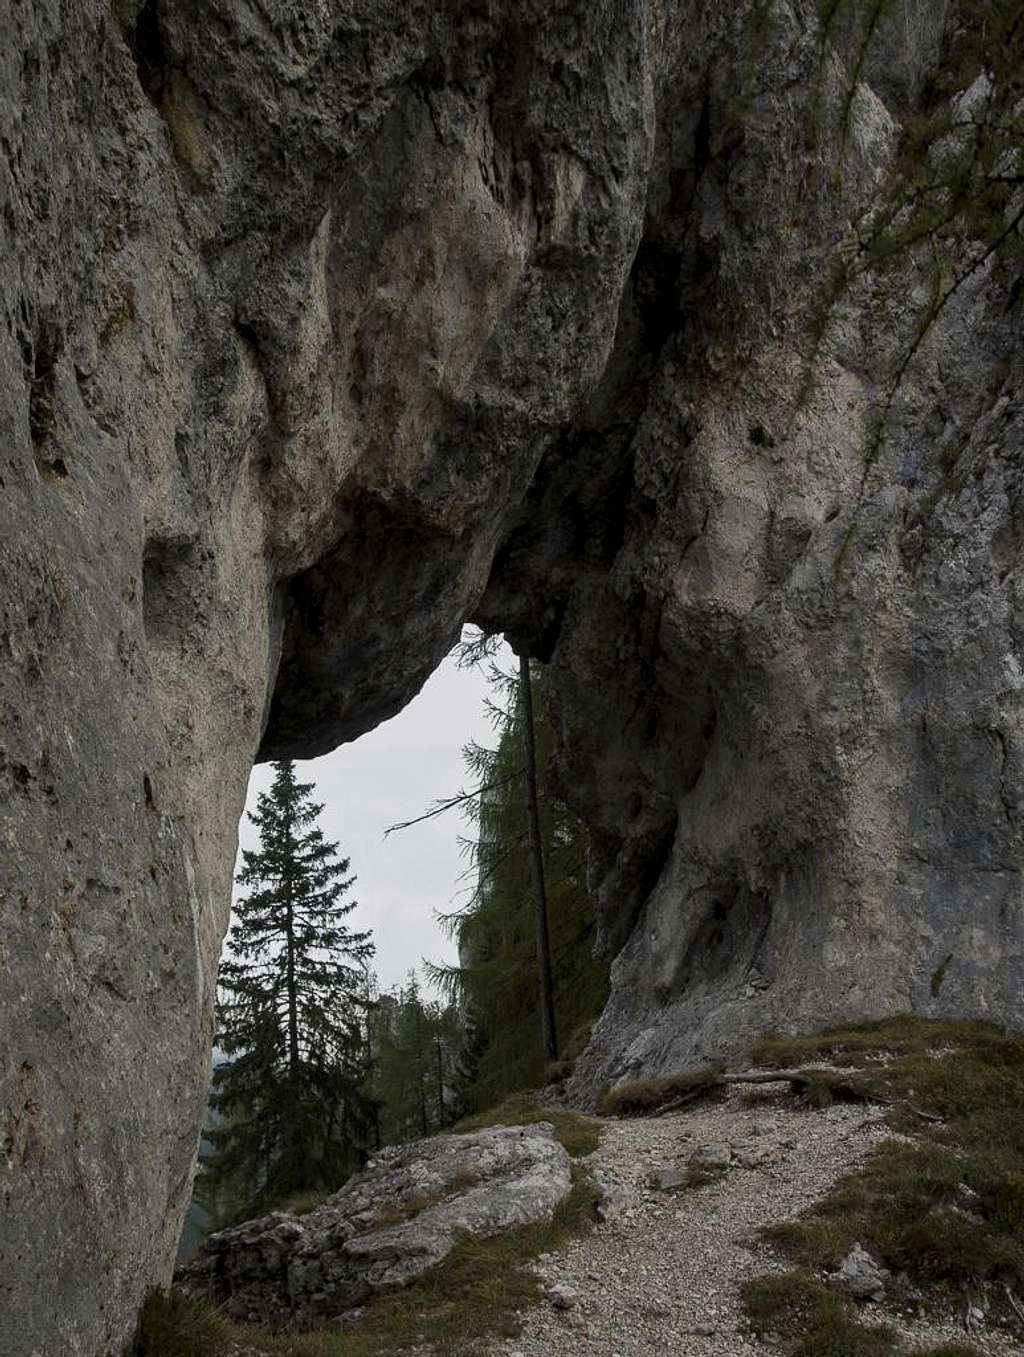 Small rock window